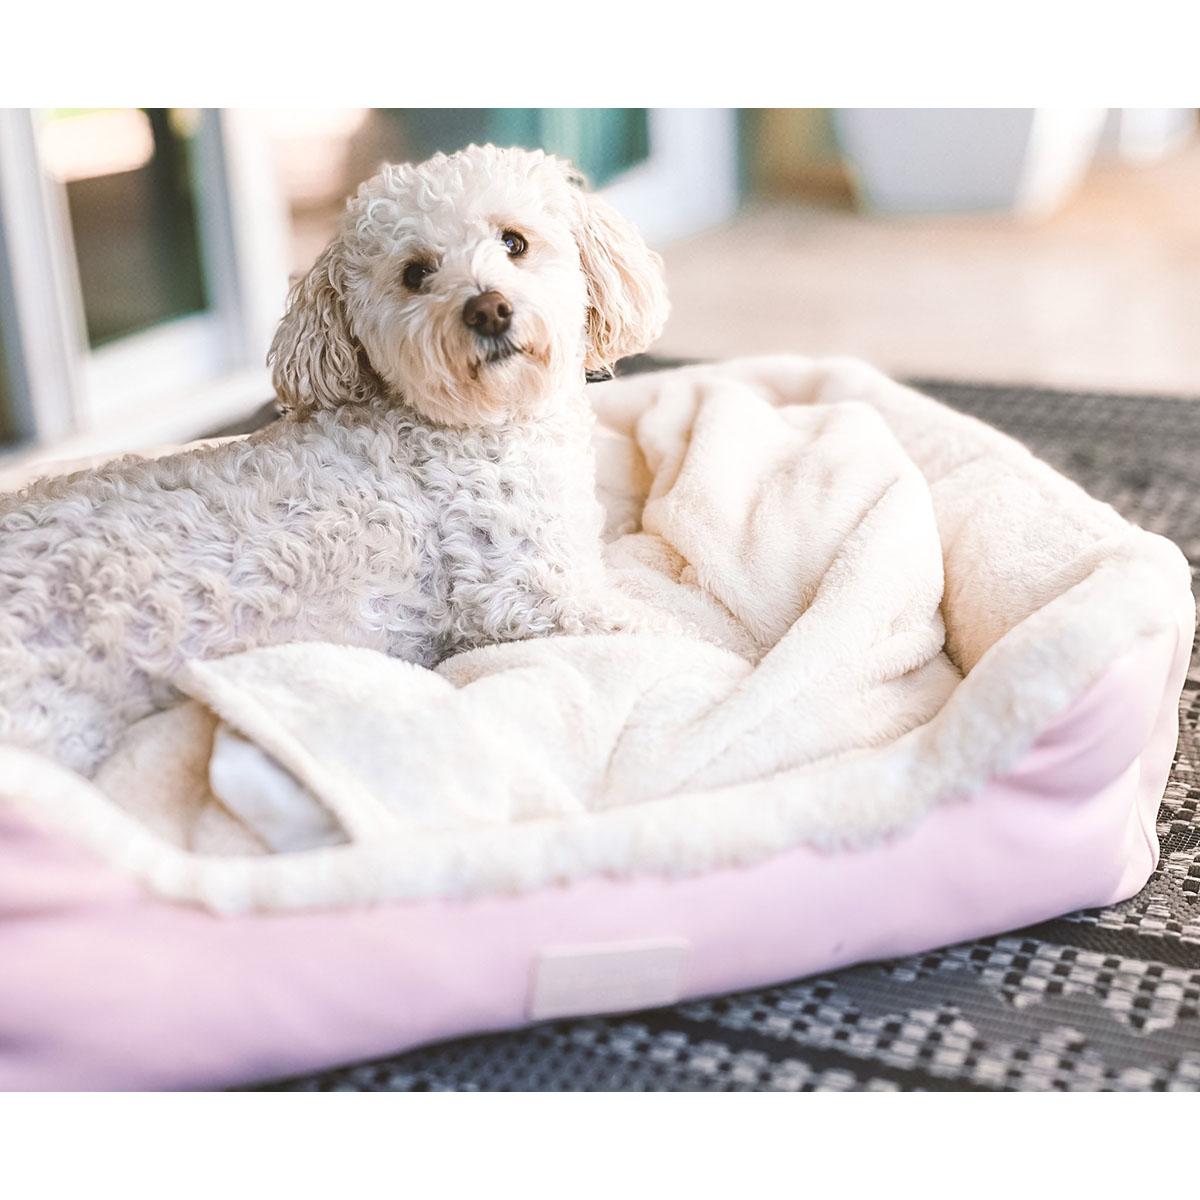 Vanderpump Pets Dog Blanket, Pink